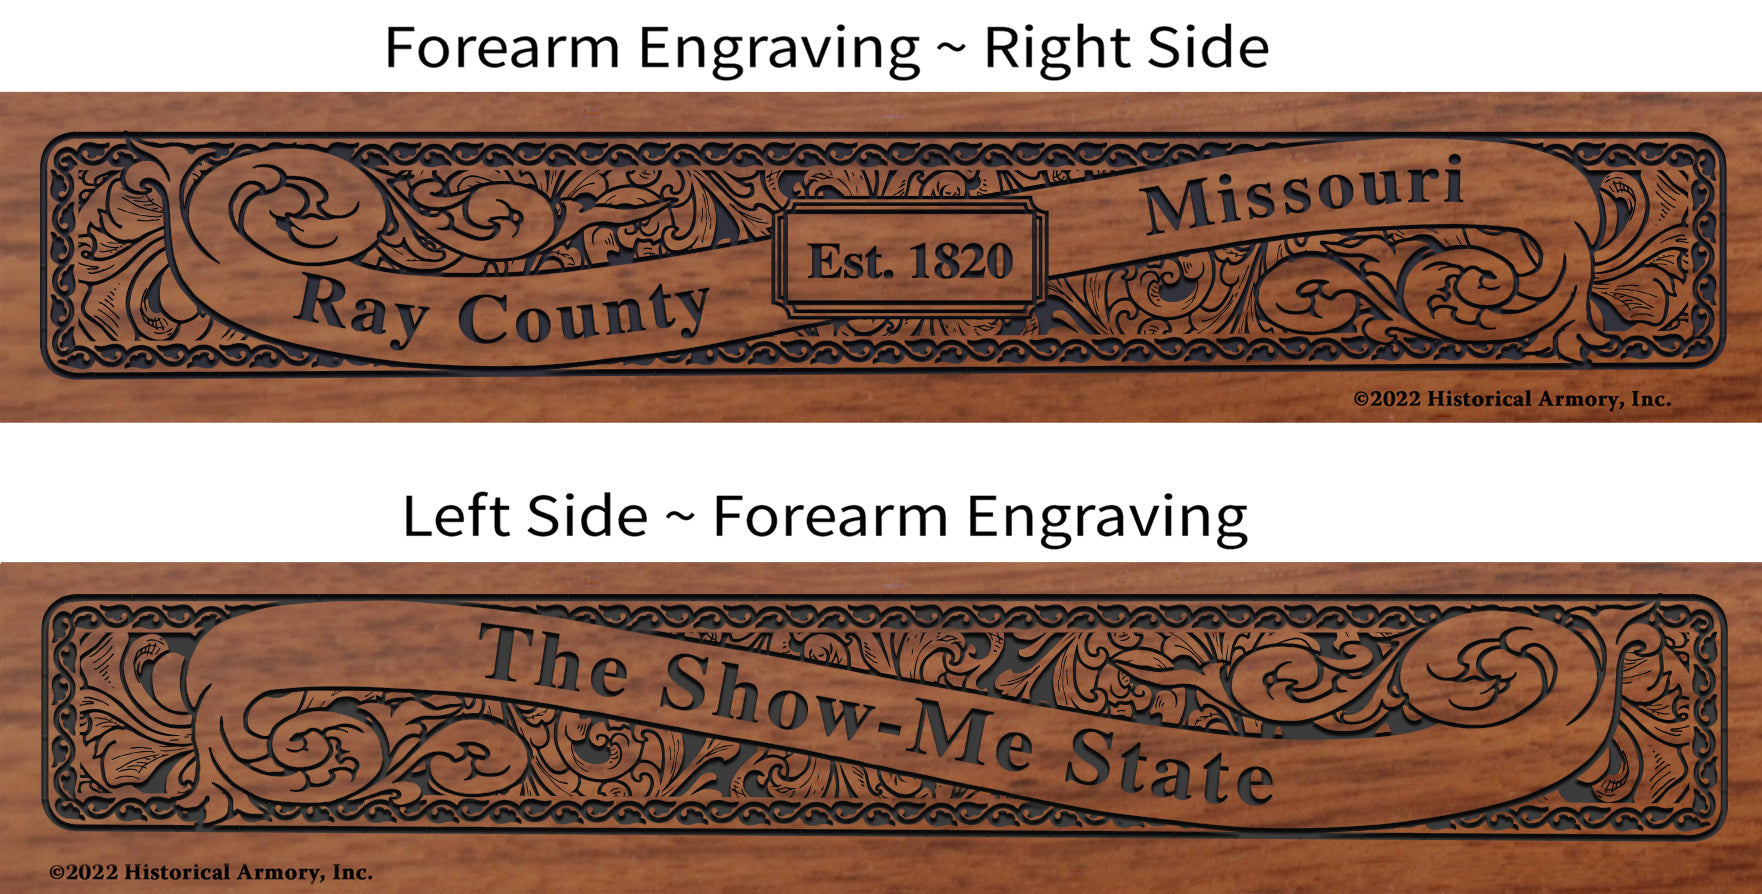 Ray County Missouri Engraved Rifle Forearm